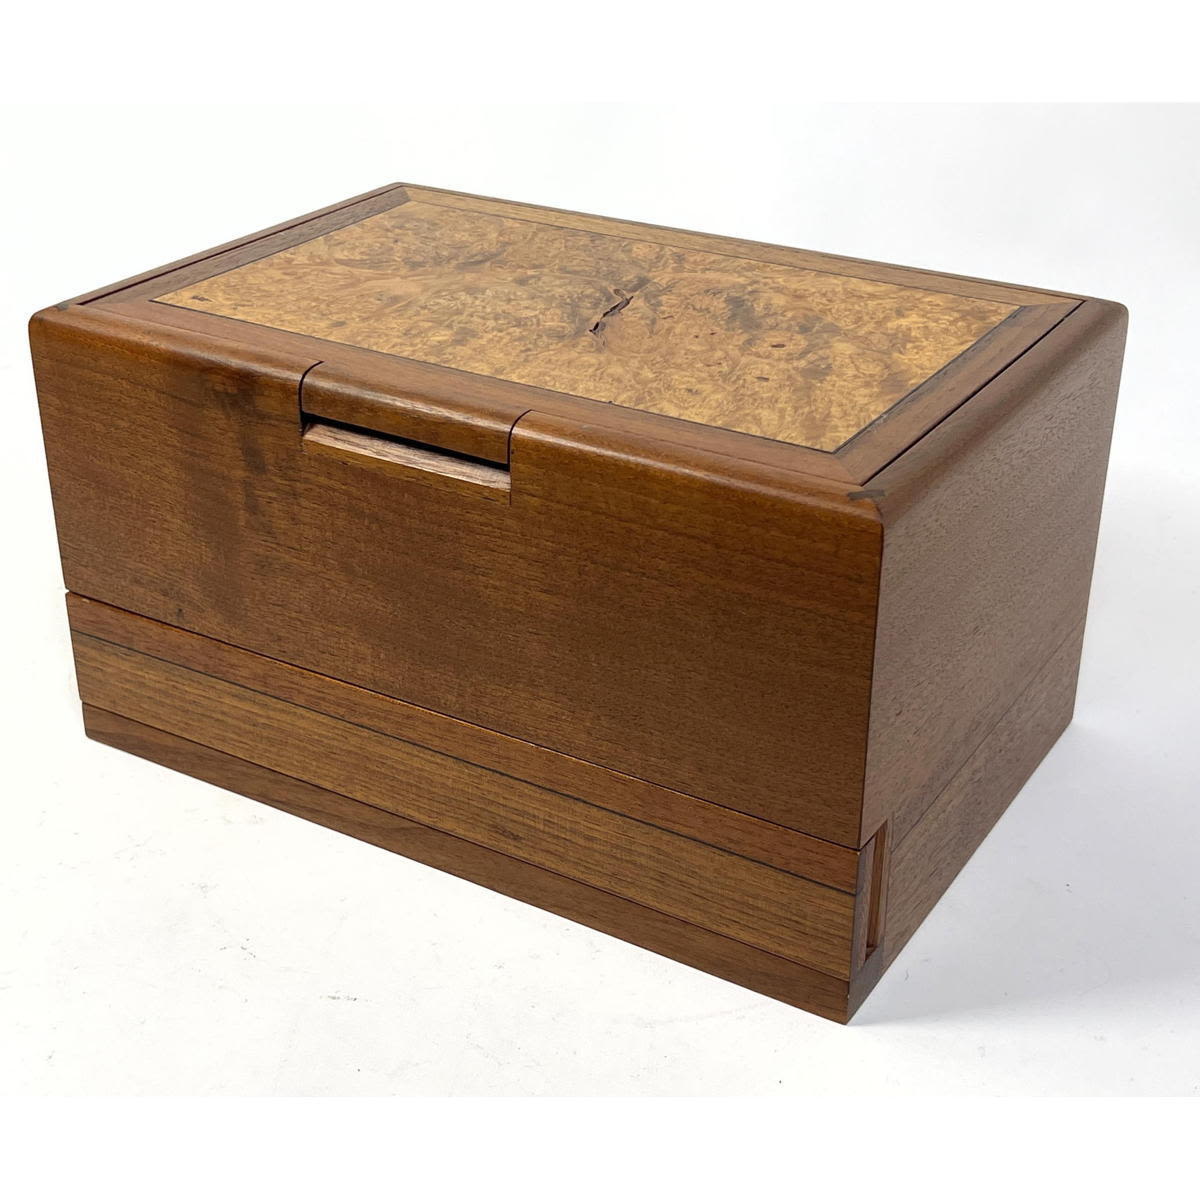 Studio Made Wood Jewelry Box with 2b7f4c